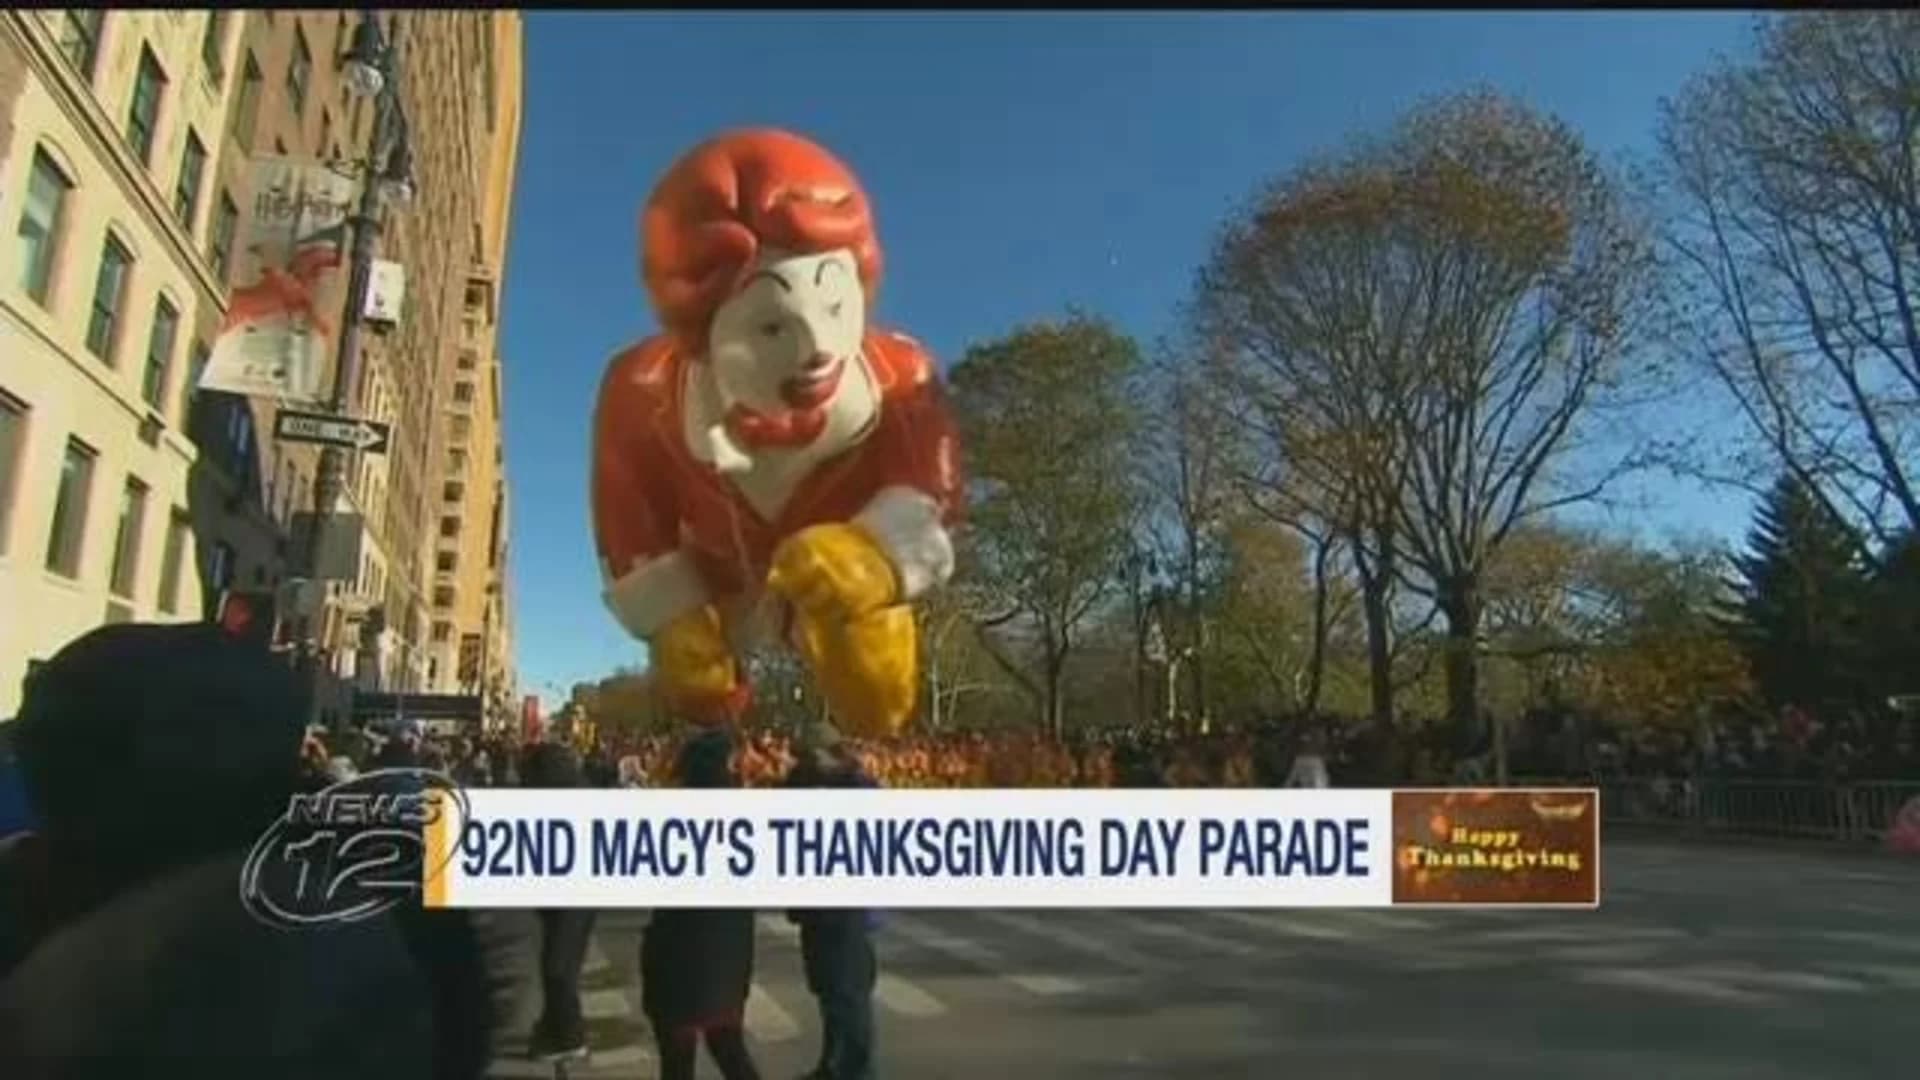 Despite cold, balloons fly at Macy's Thanksgiving Day parade